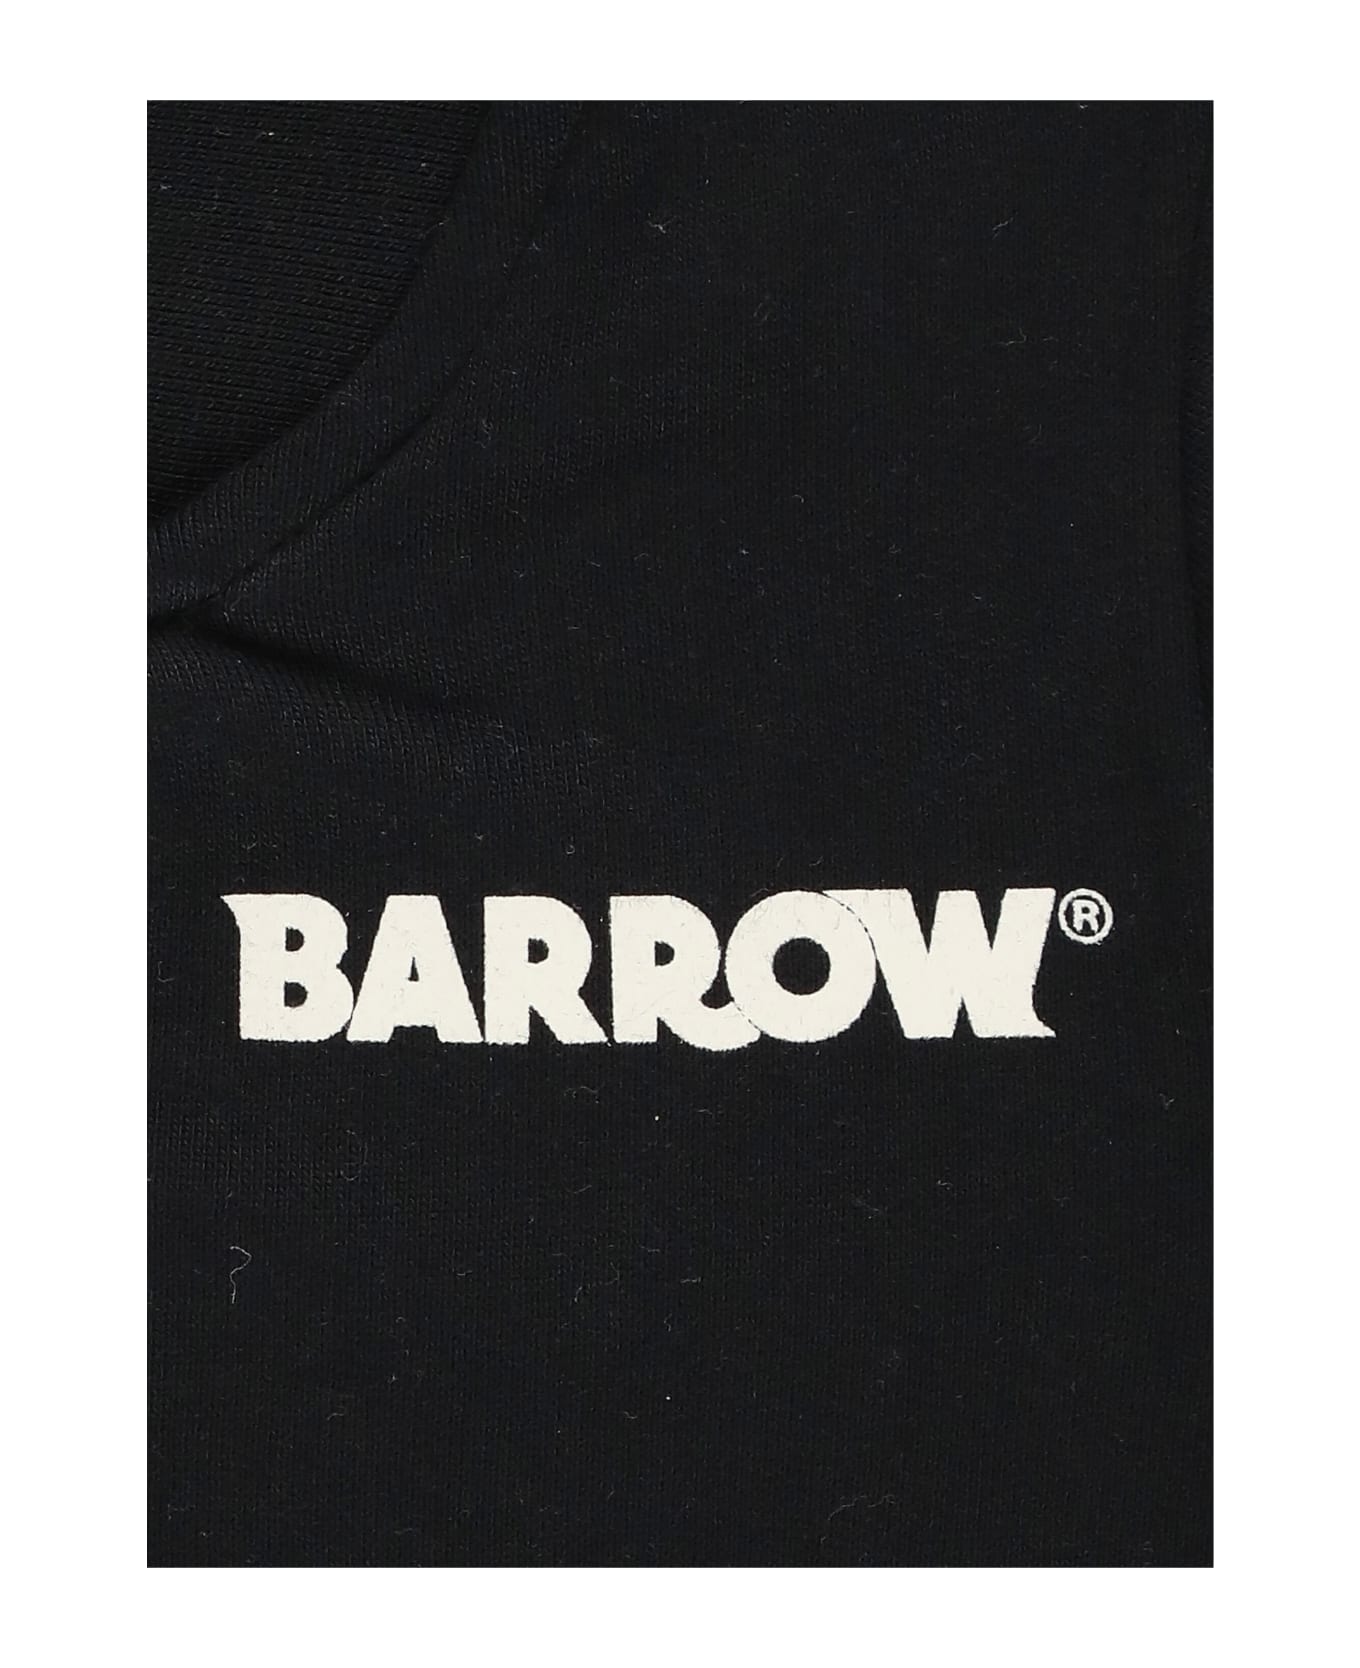 Barrow Sweatshirt With Logo - Black